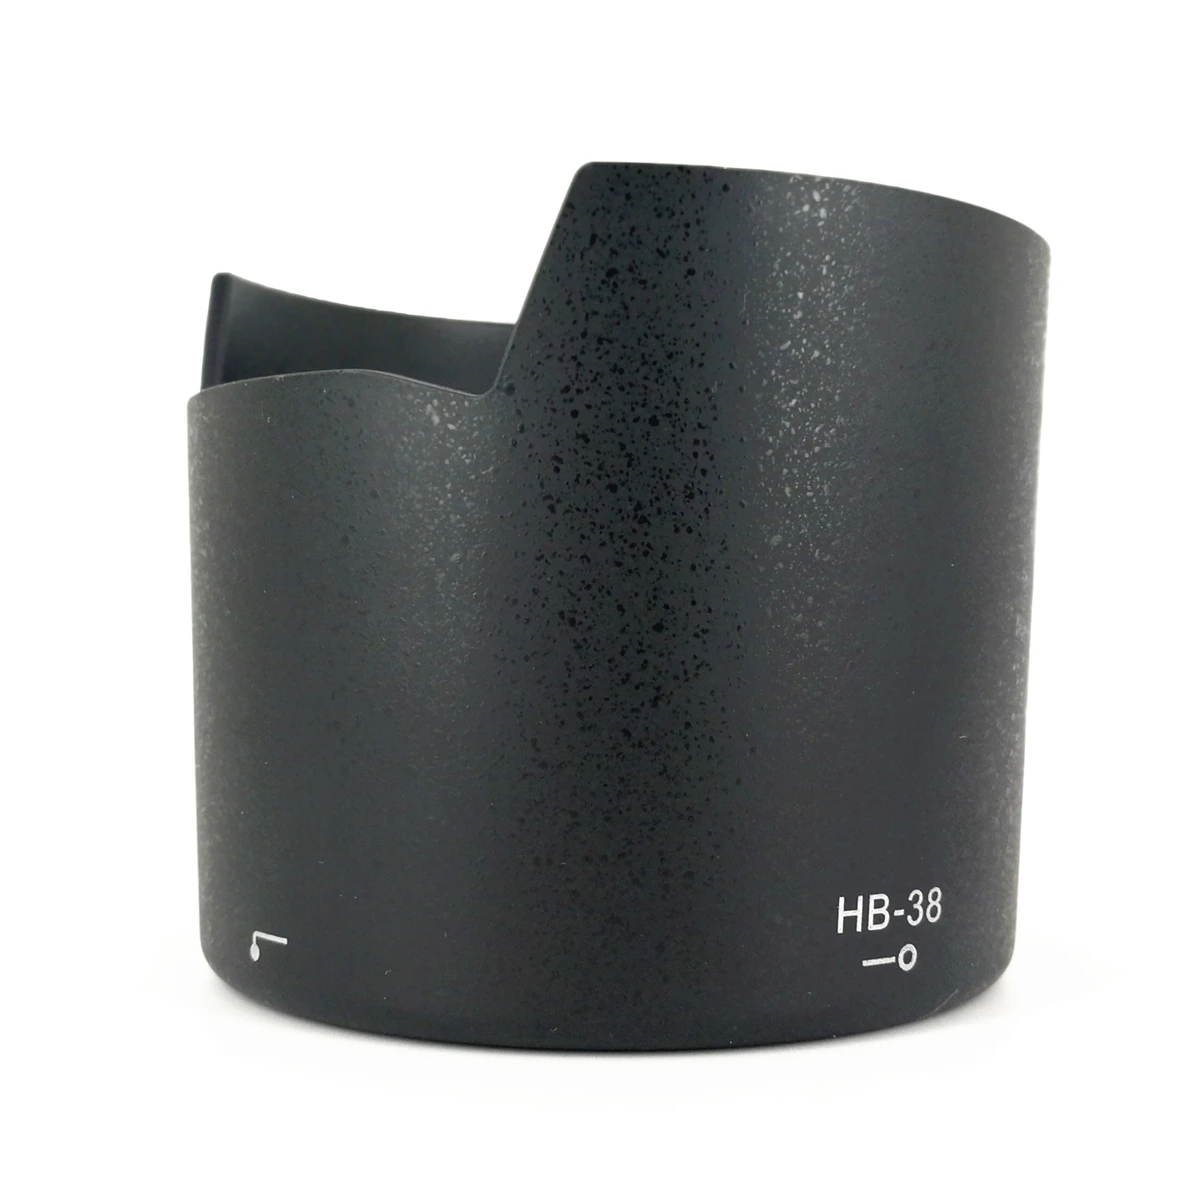 

5pcs Lens Hood replace HB-38 for Nikon AF-S VR Micro-Nikkor 105mm f/2.8G IF-ED